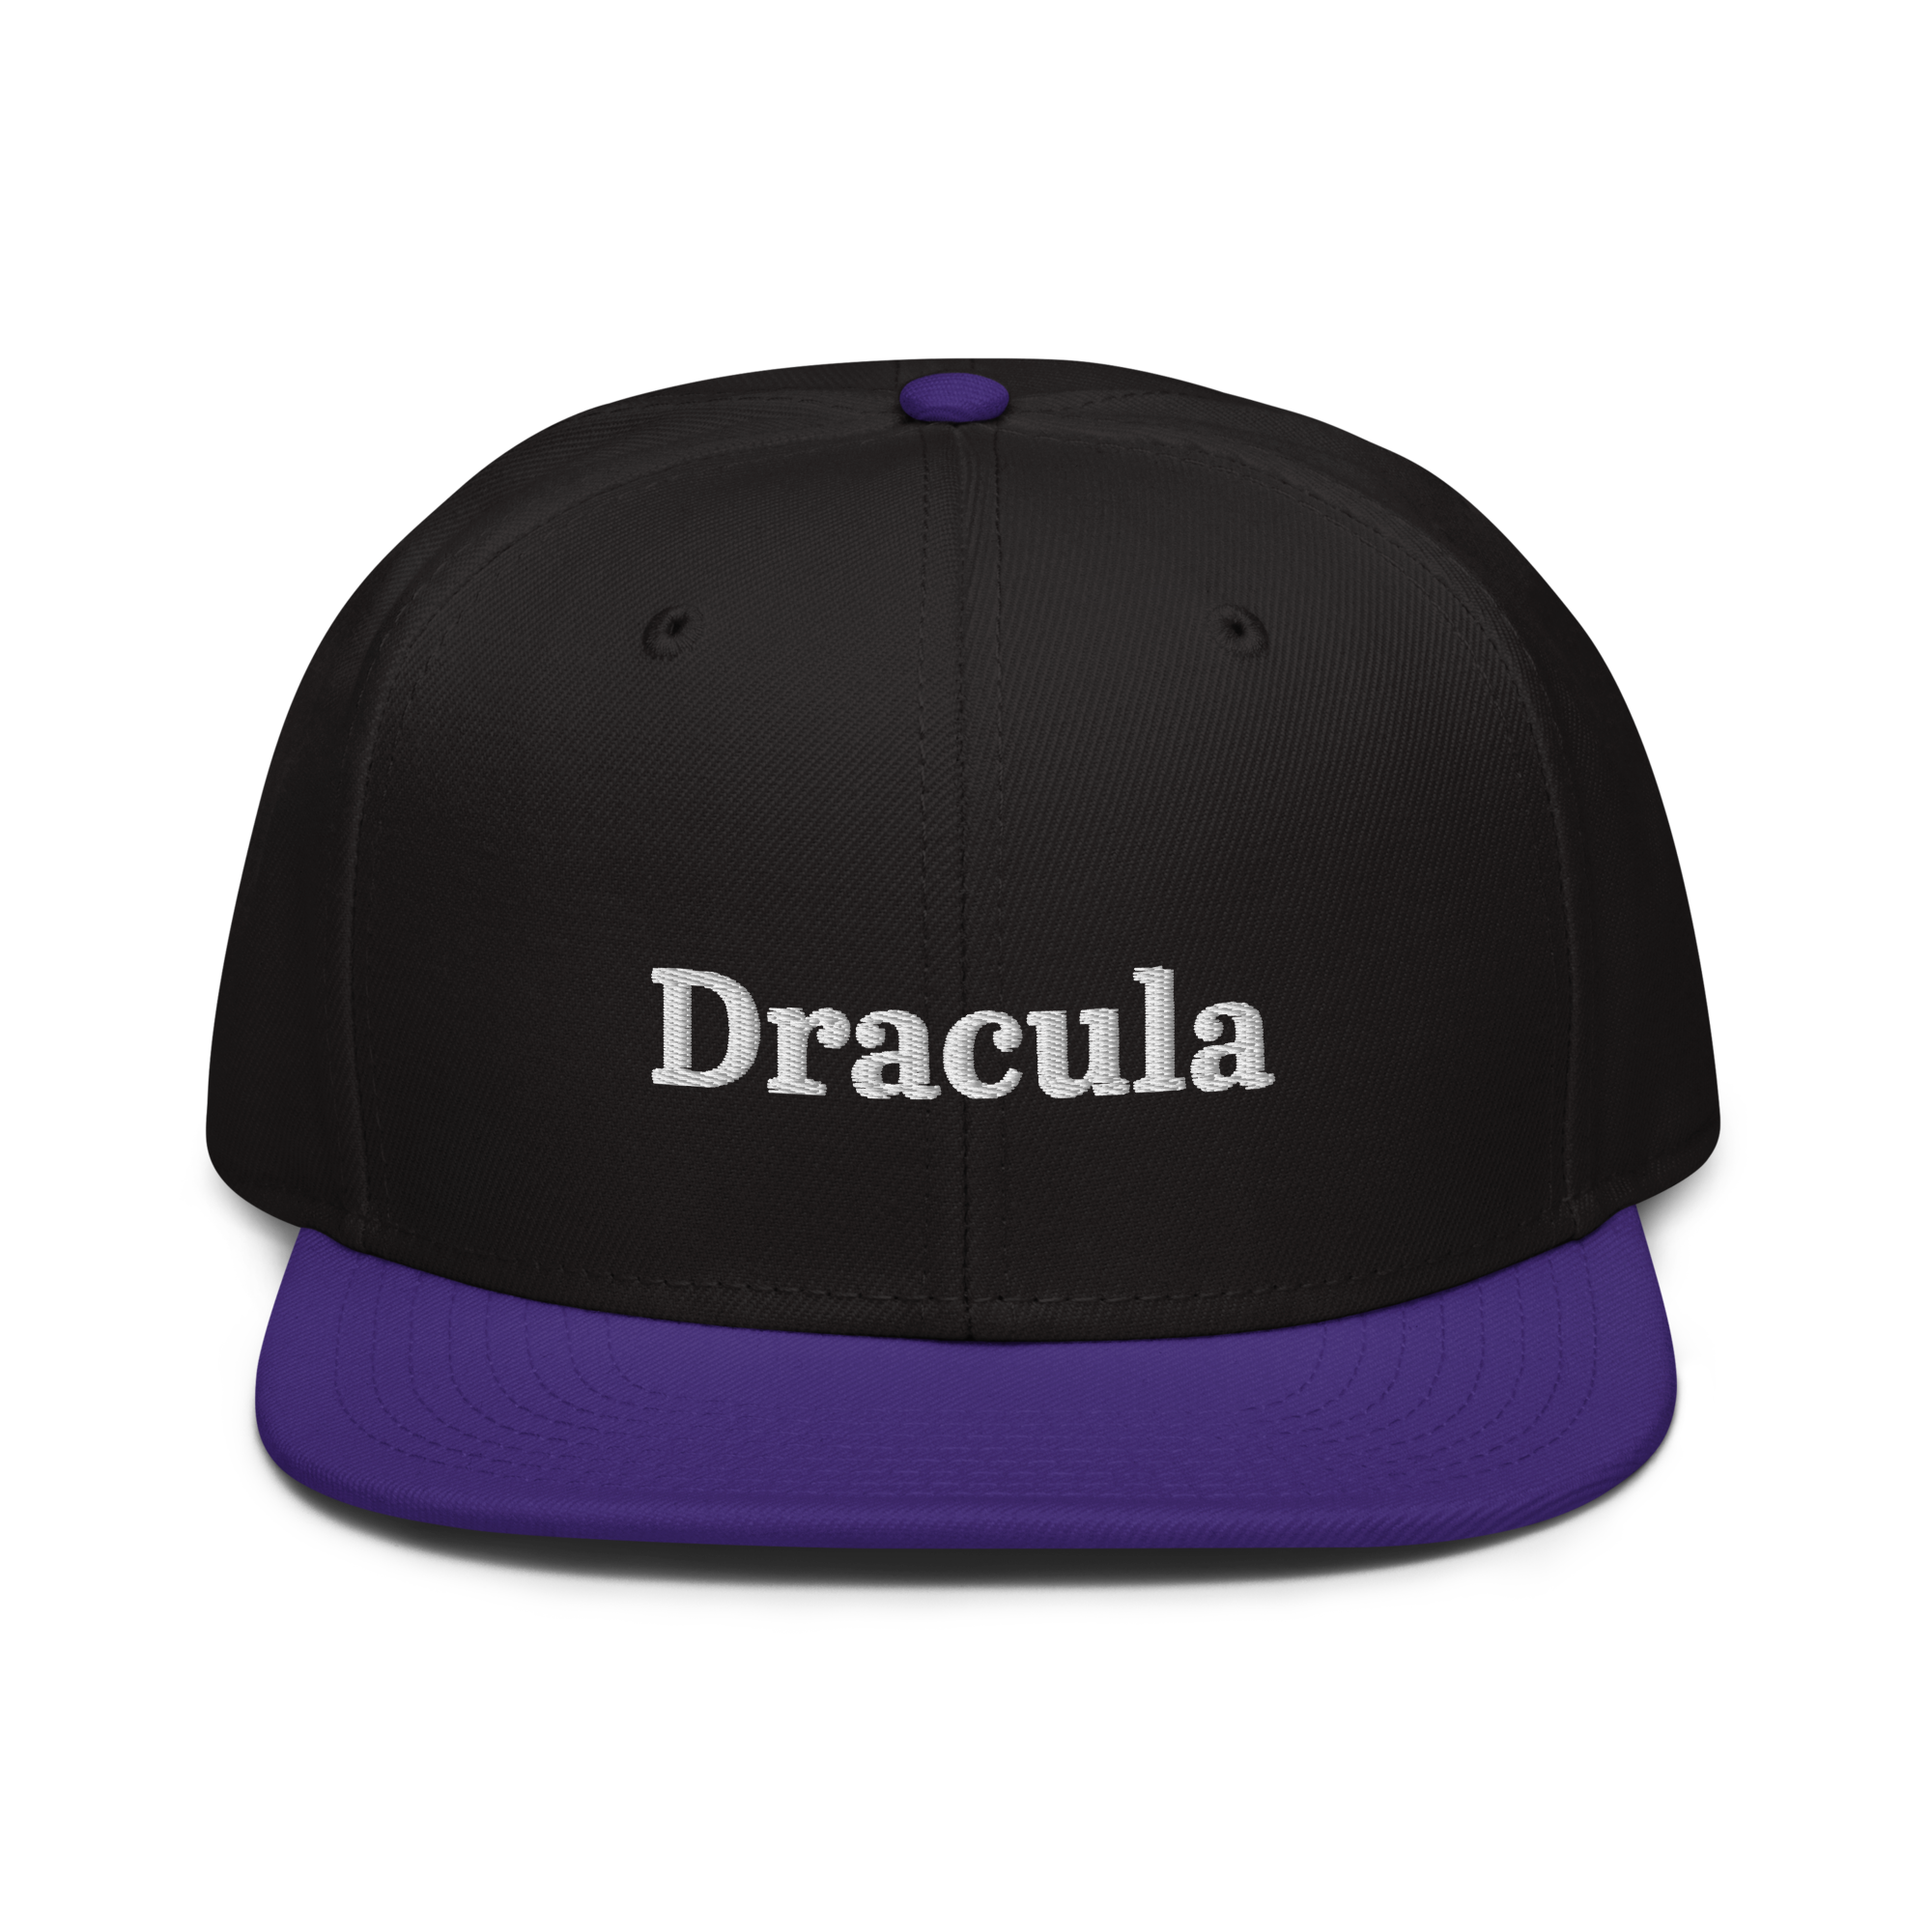 dracula-snapback-hat-1.png